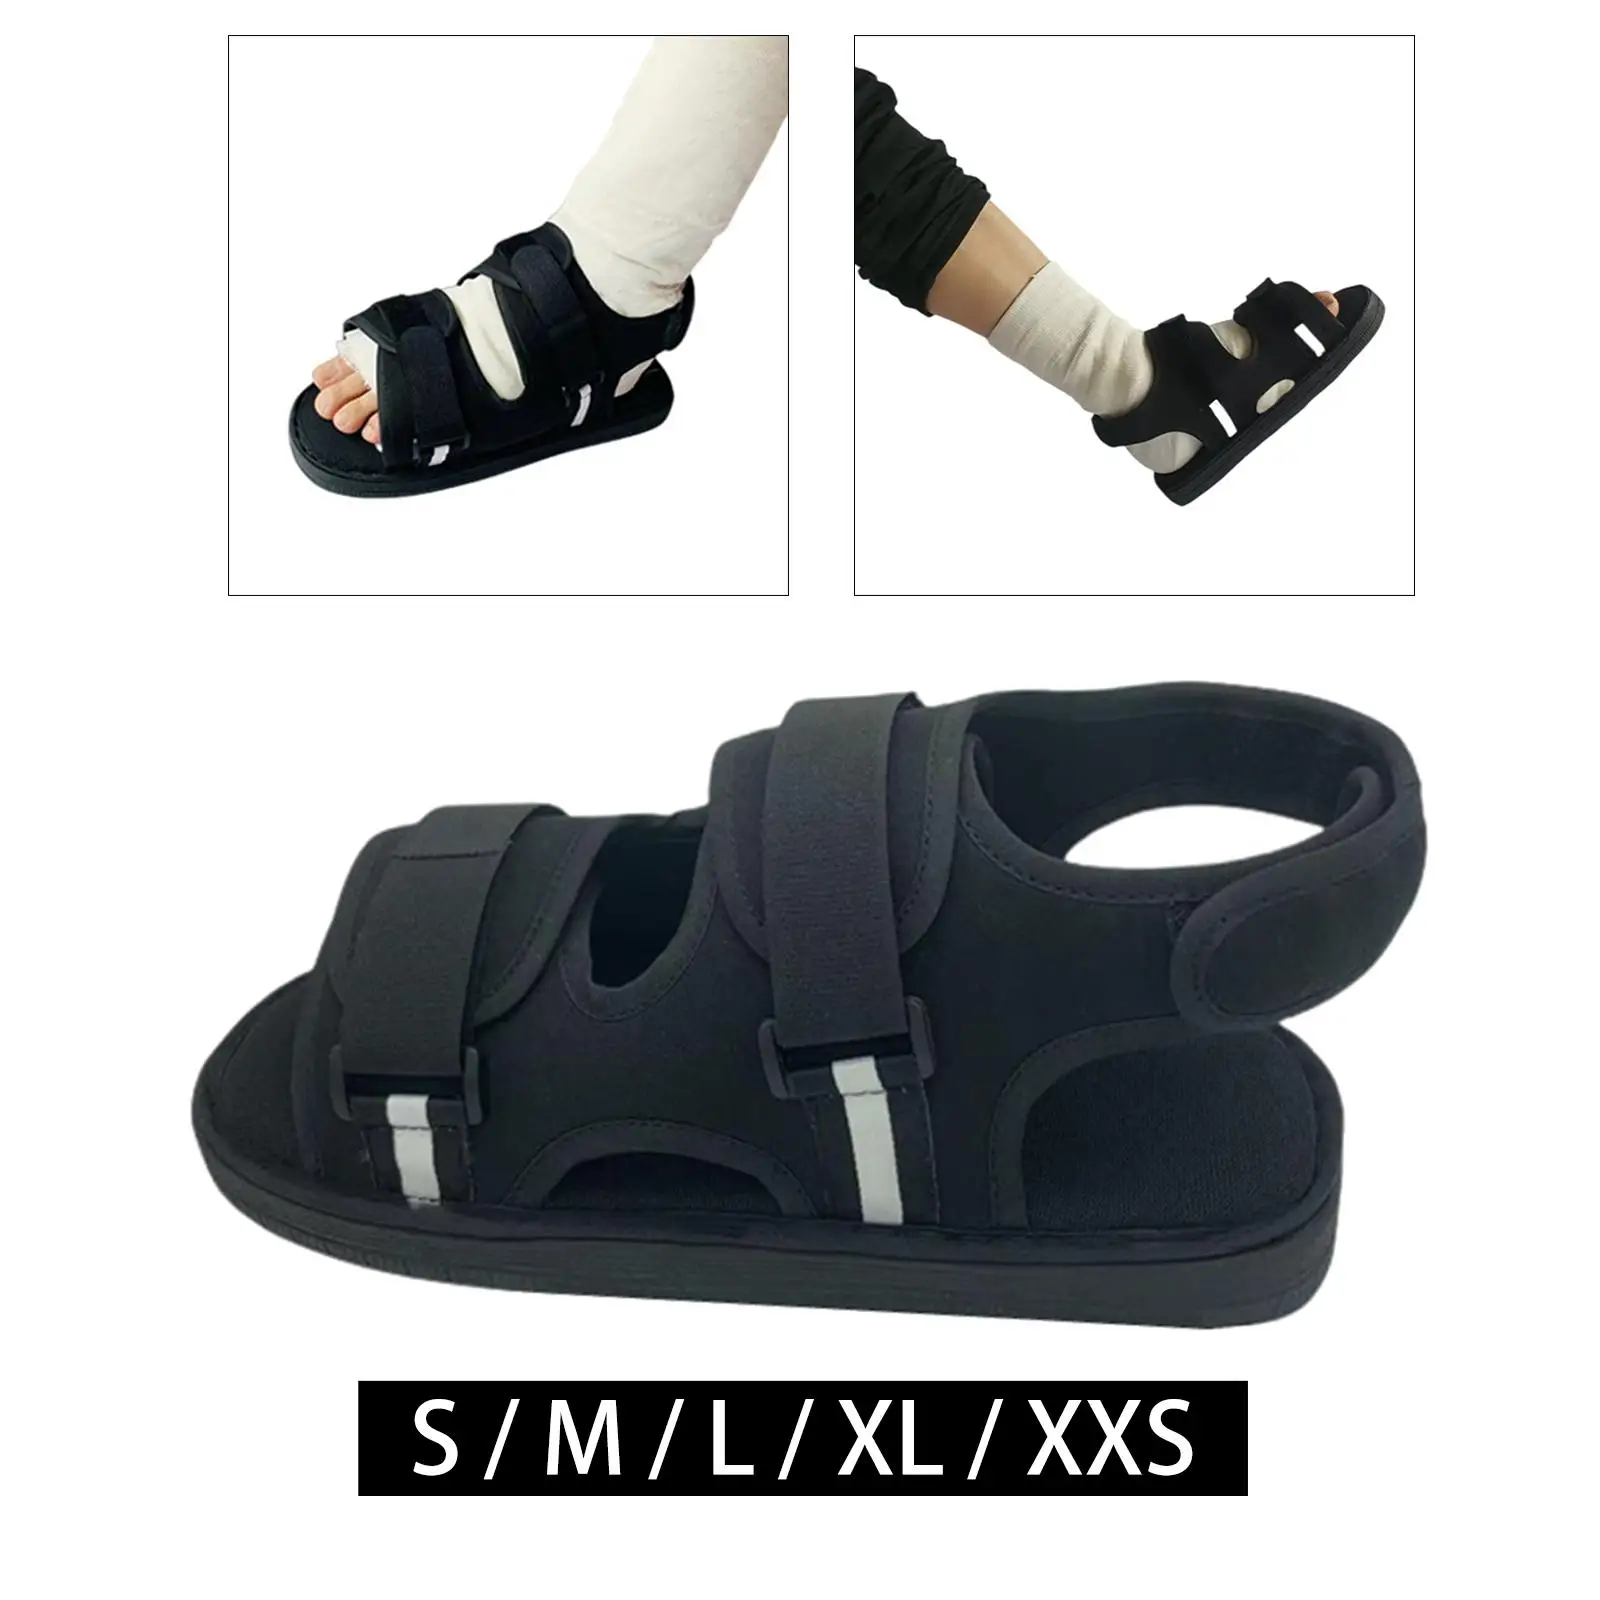 Post OP Closed Toe Walking Shoe Orthopedic Fracture Support for Men Women